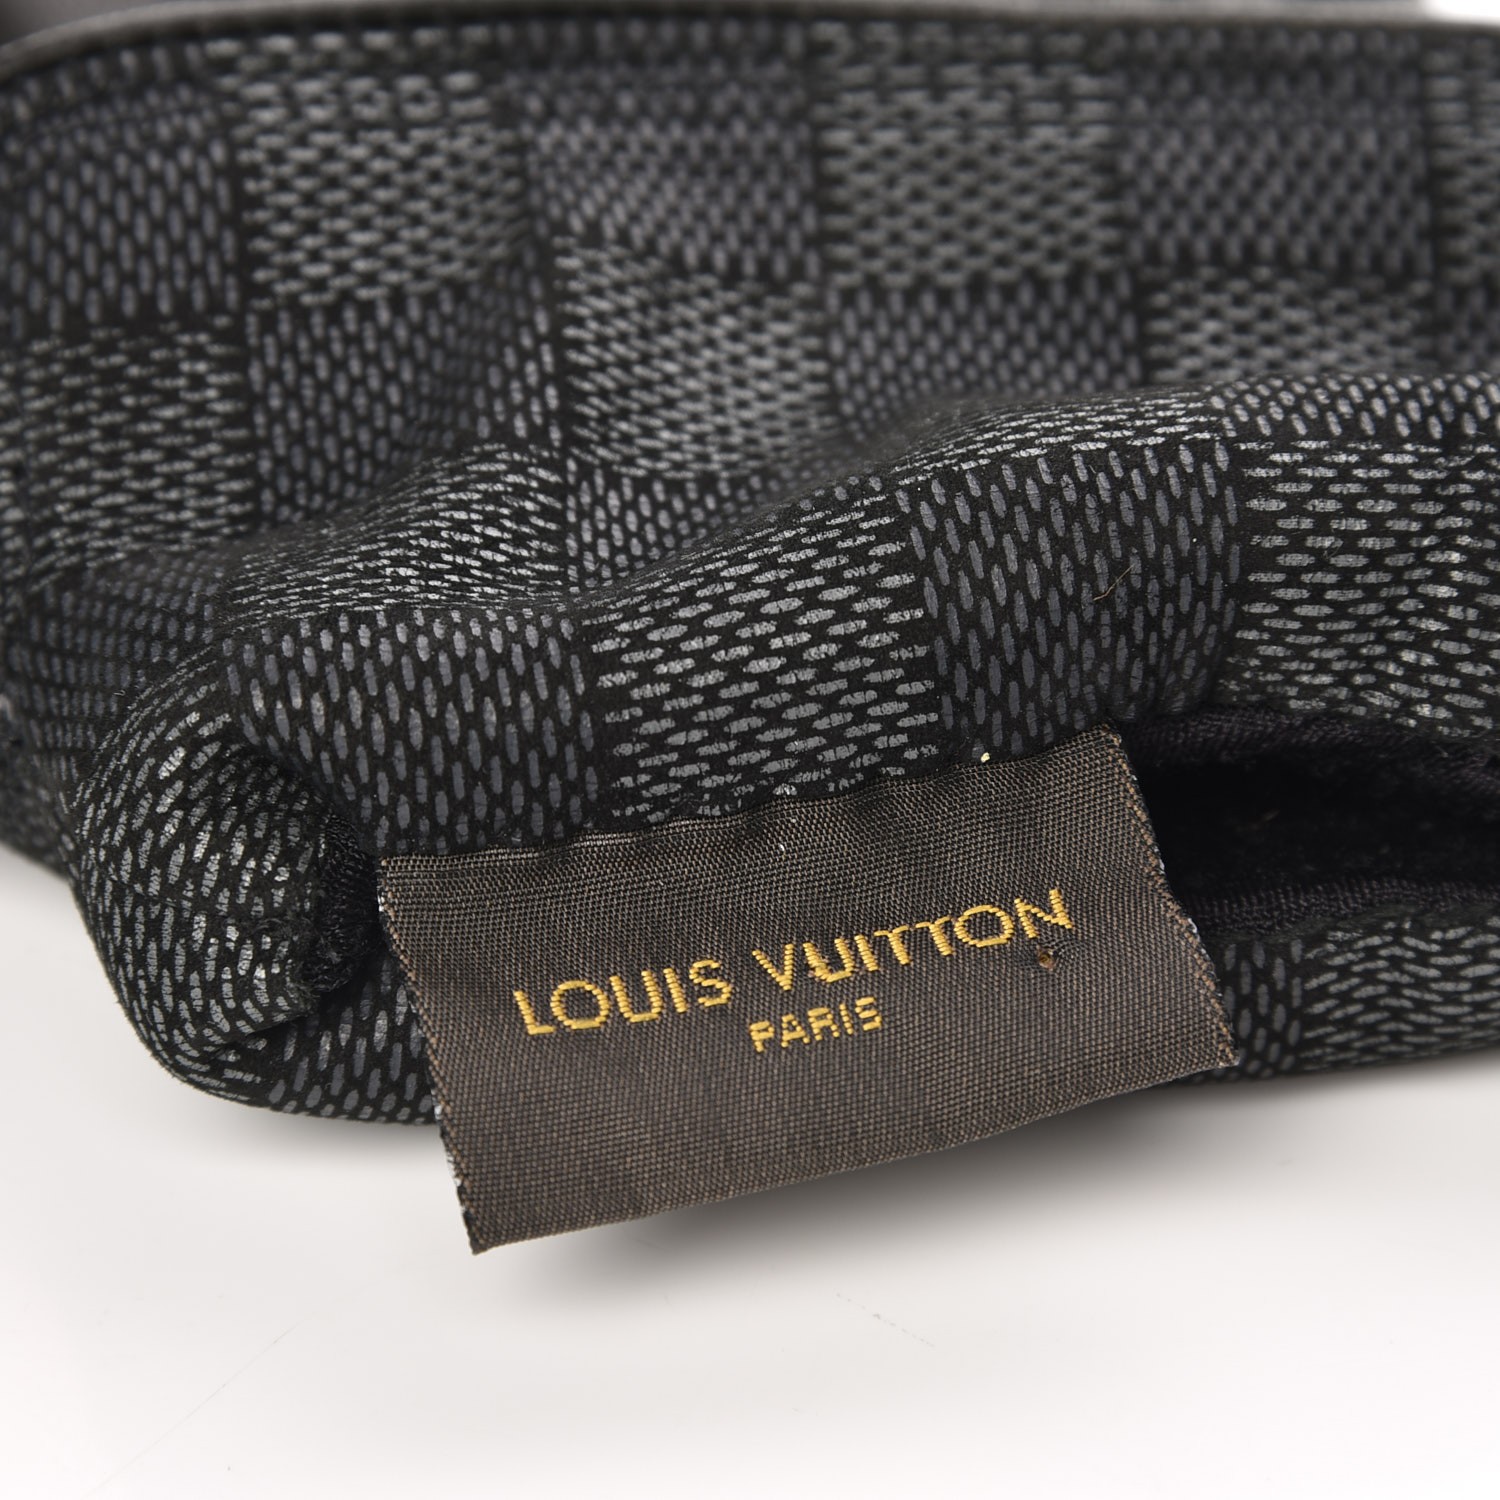 LOUIS VUITTON Golf Glove Size L